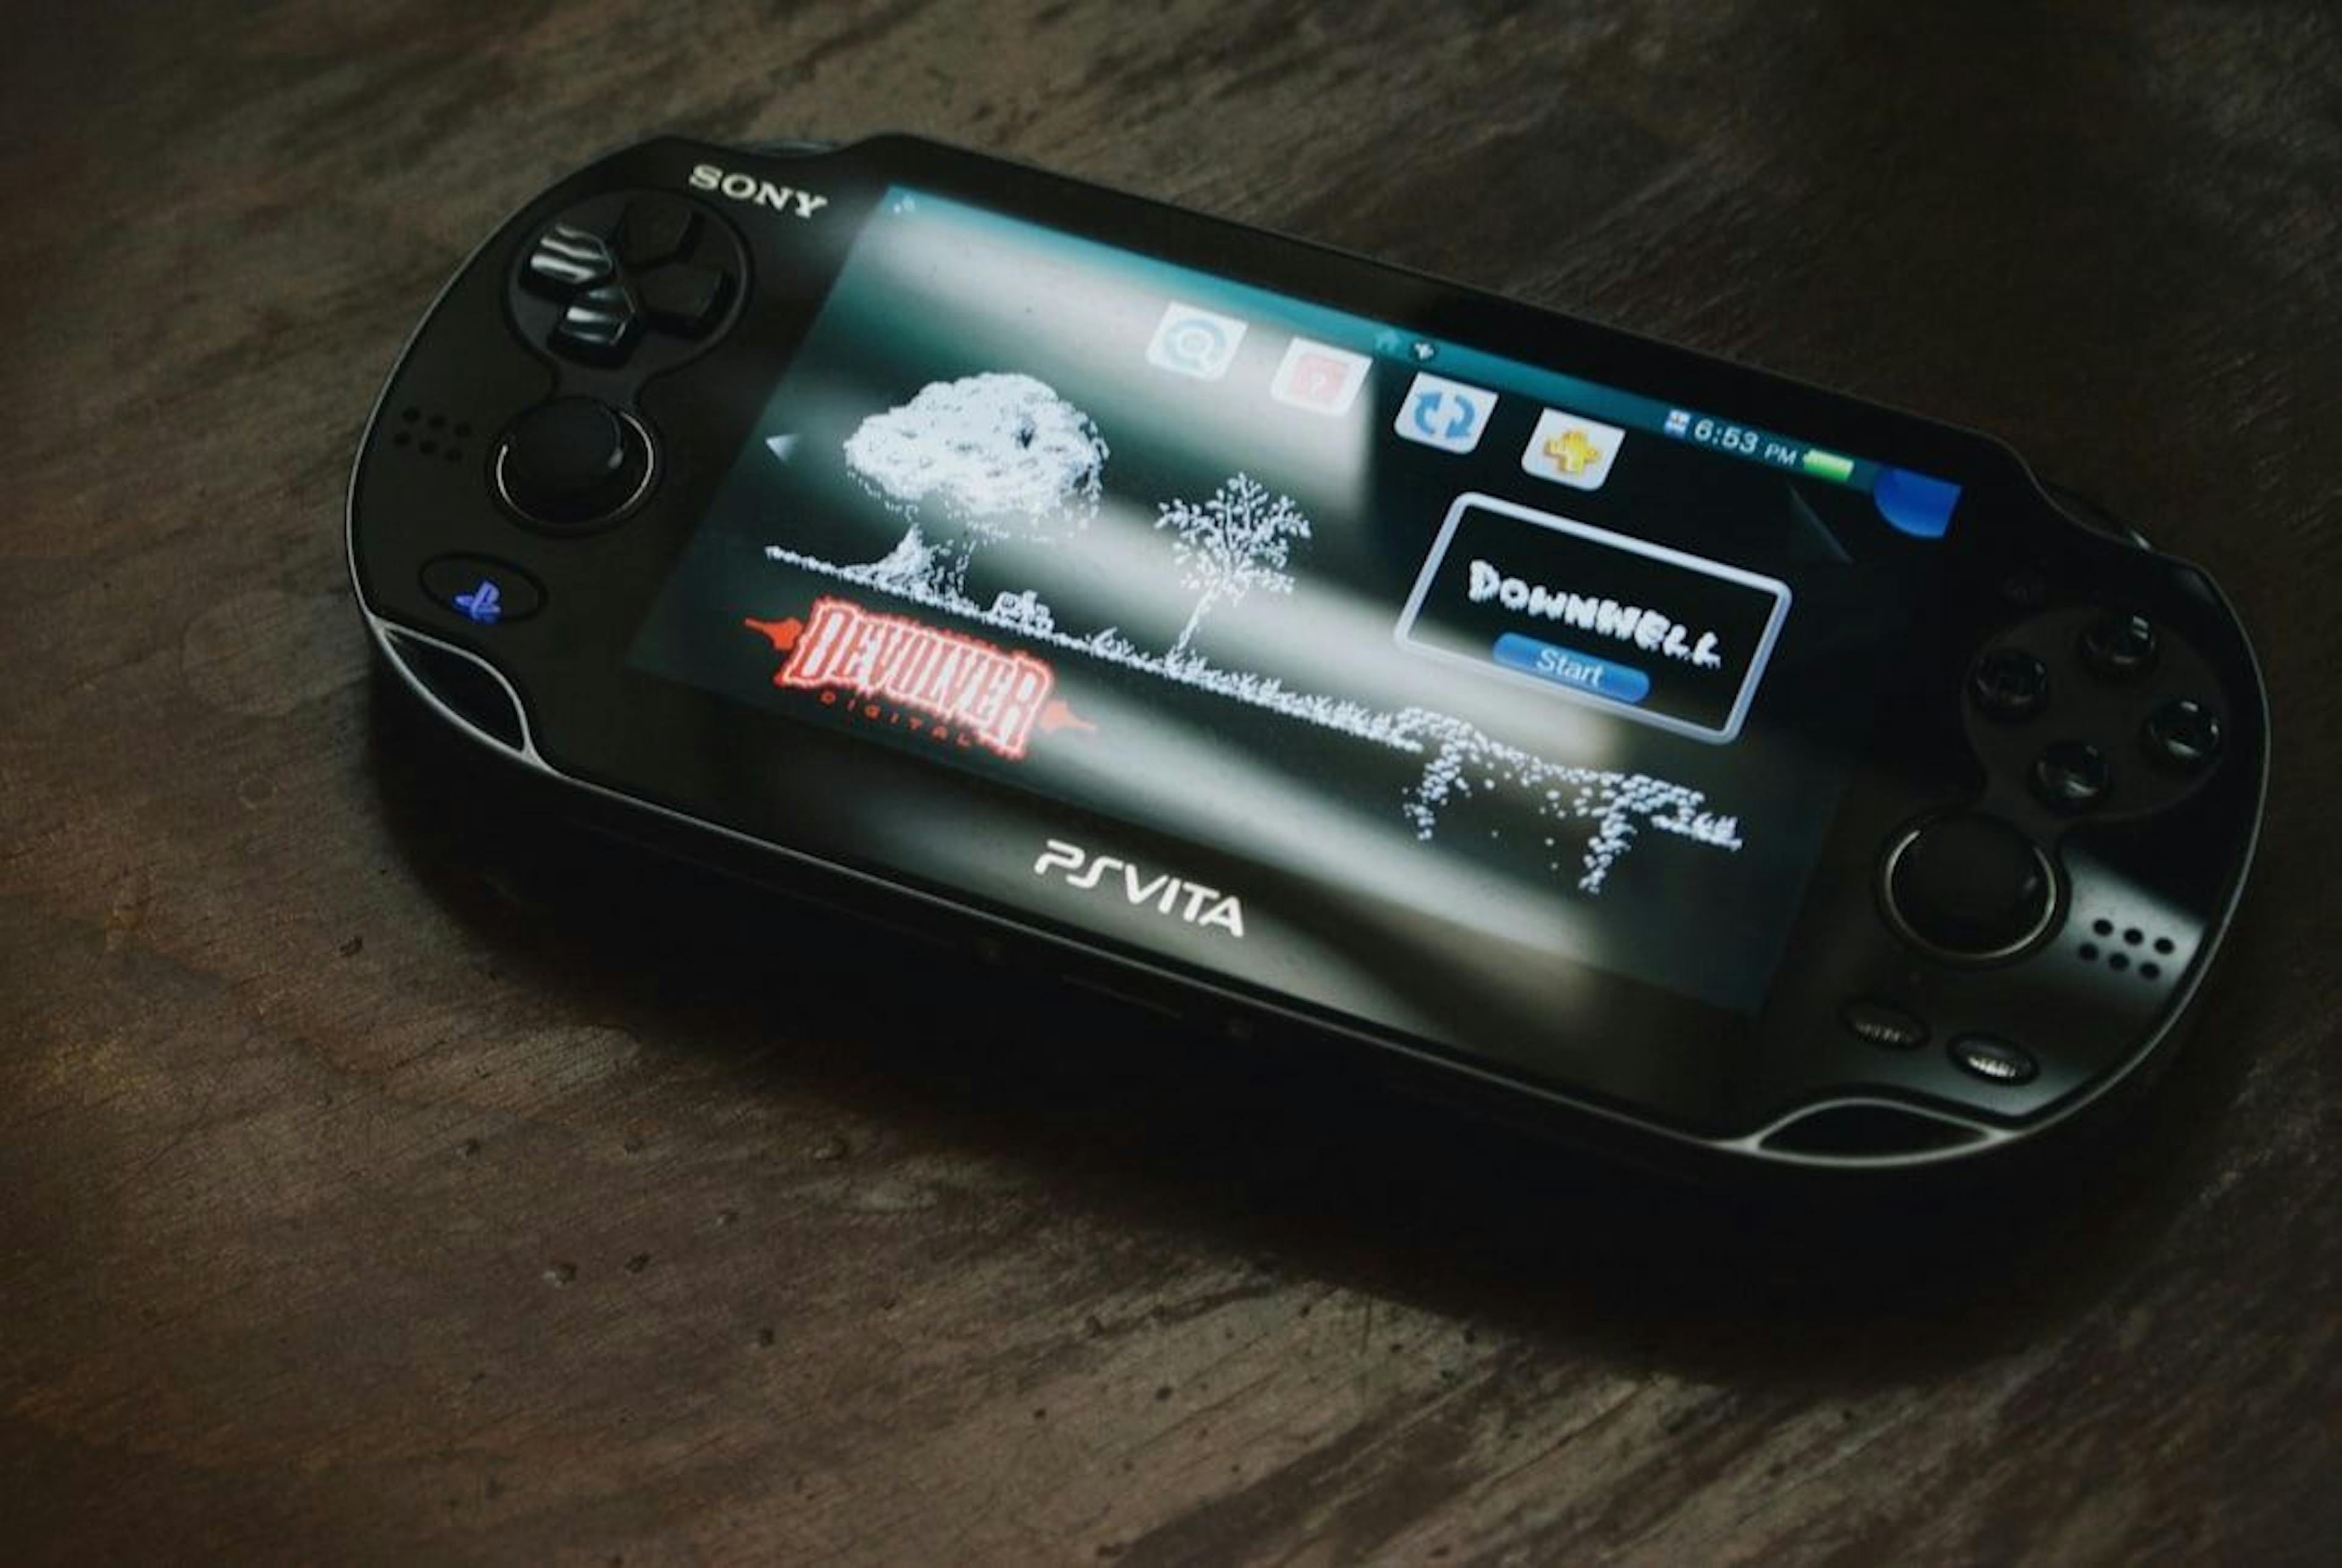 PlayStation Vita modelo OLED